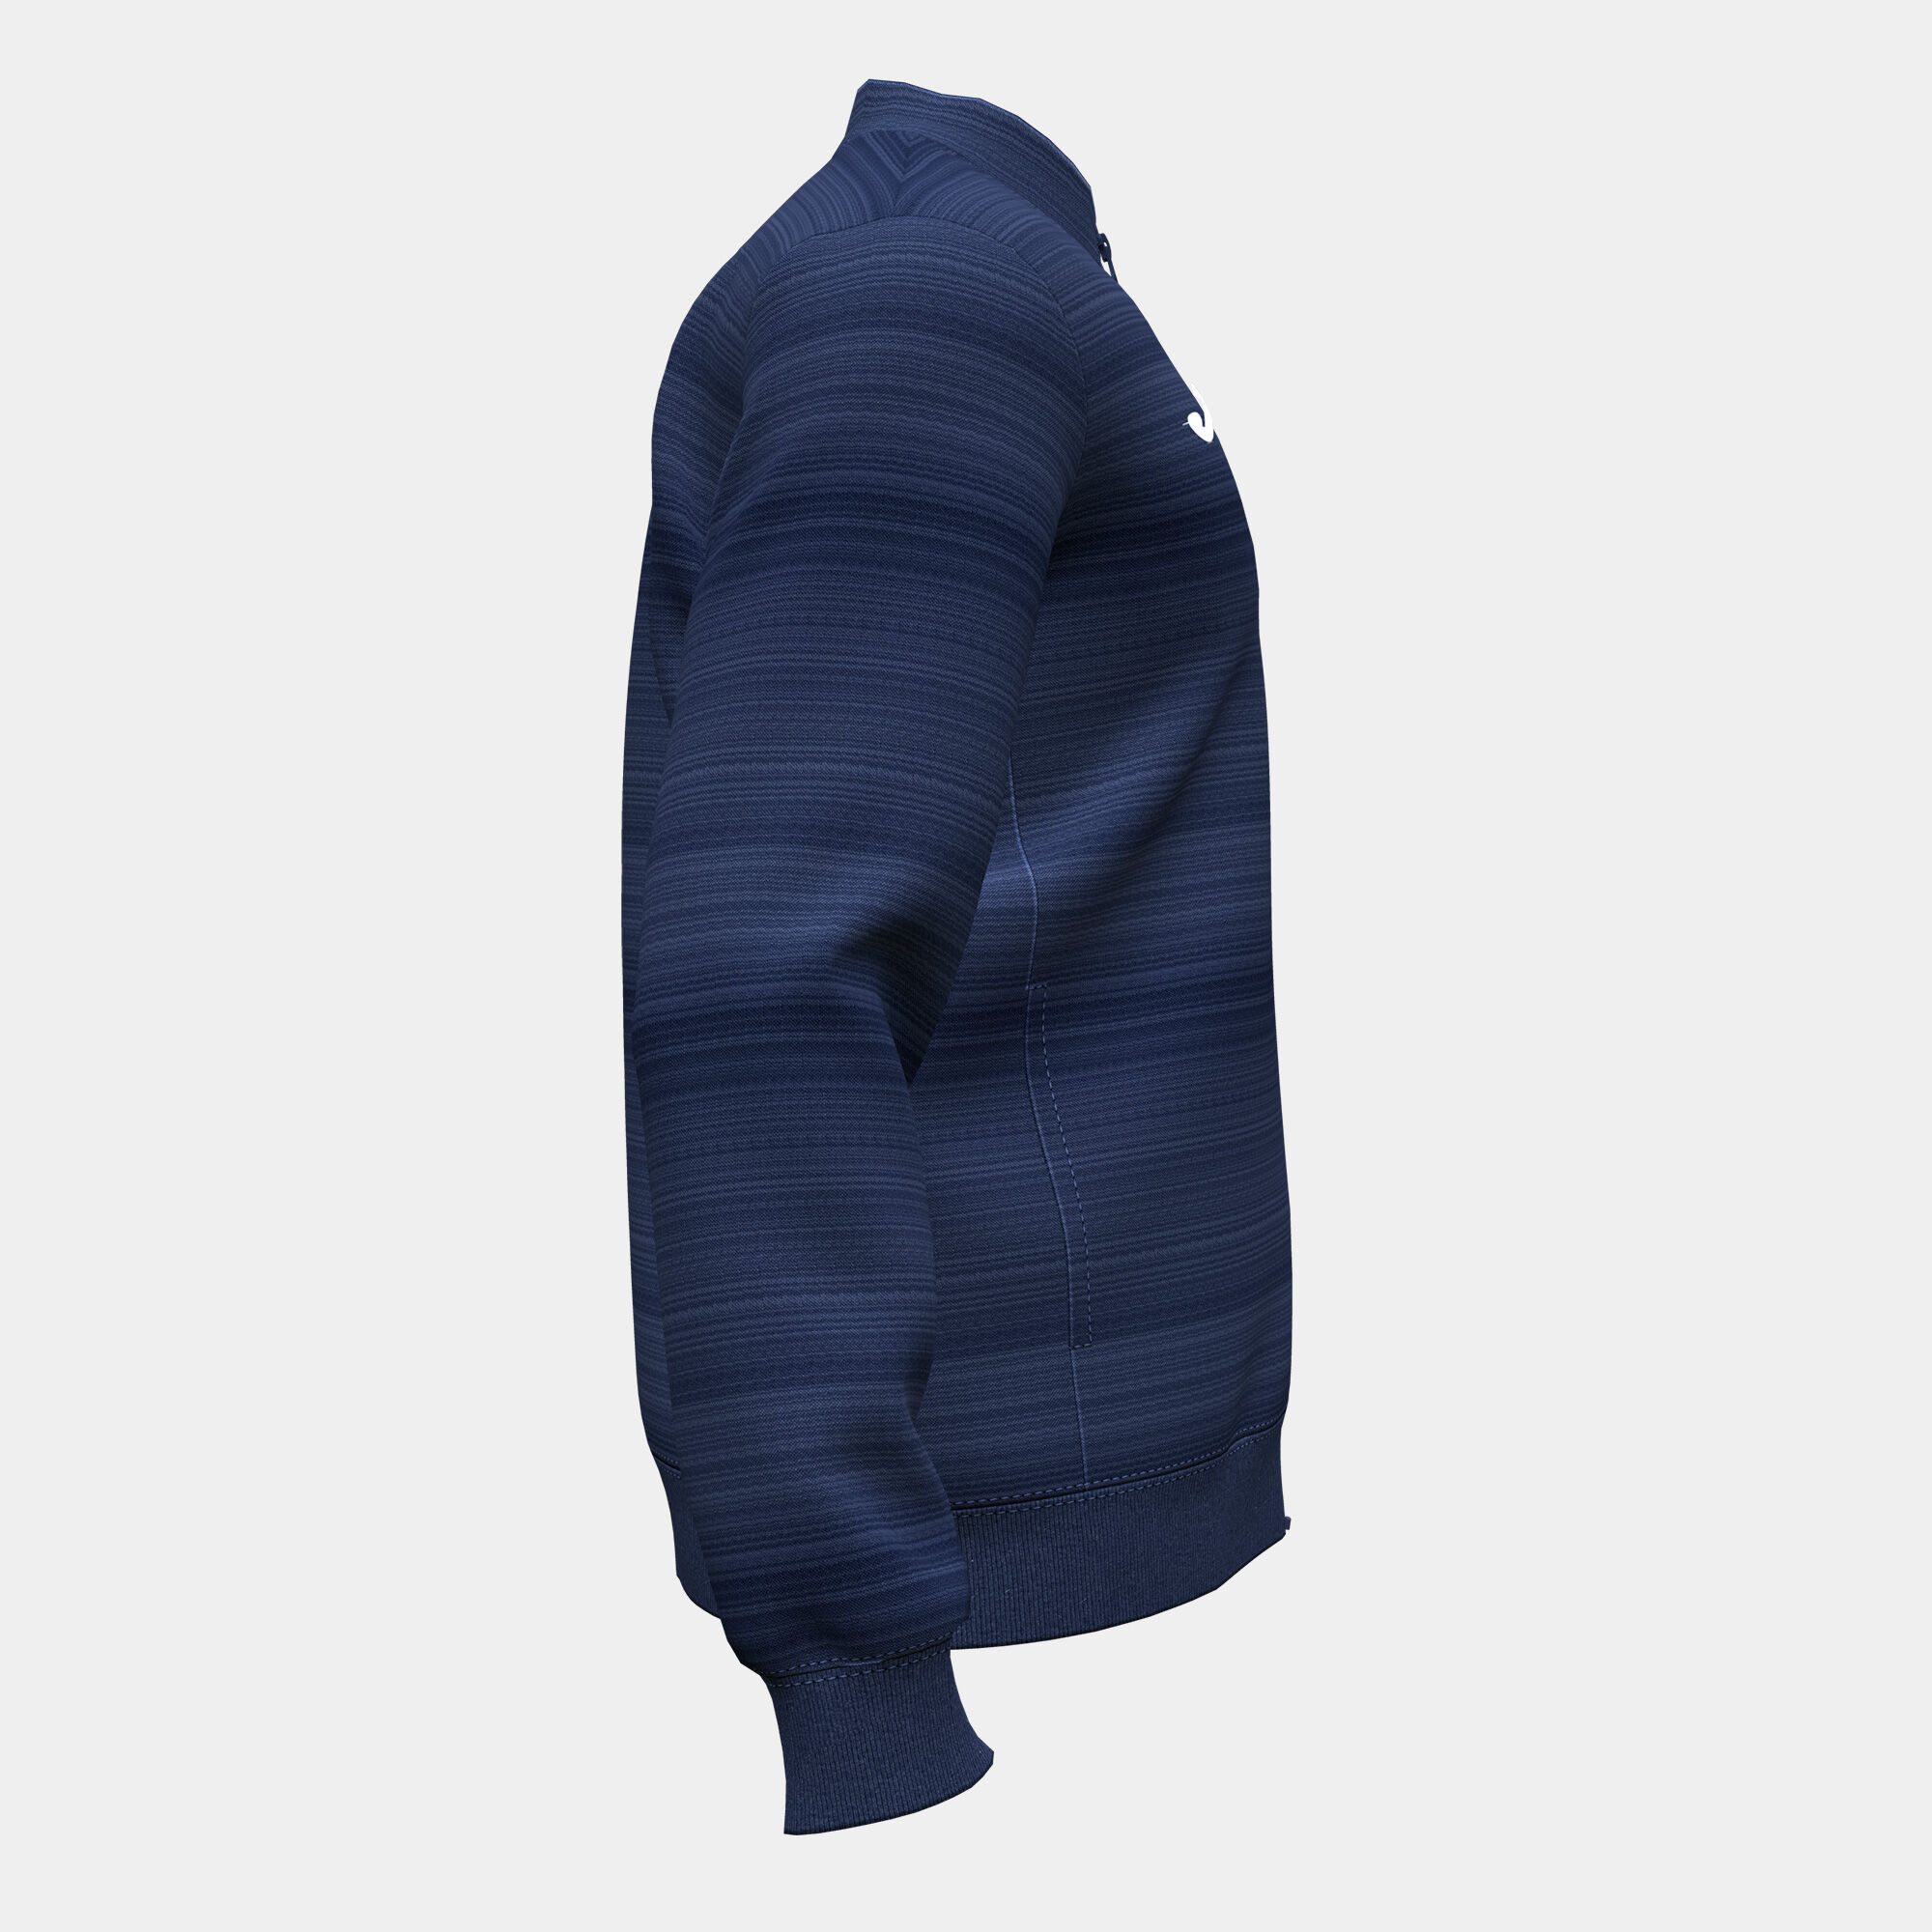 Jacket man Grafity III navy blue